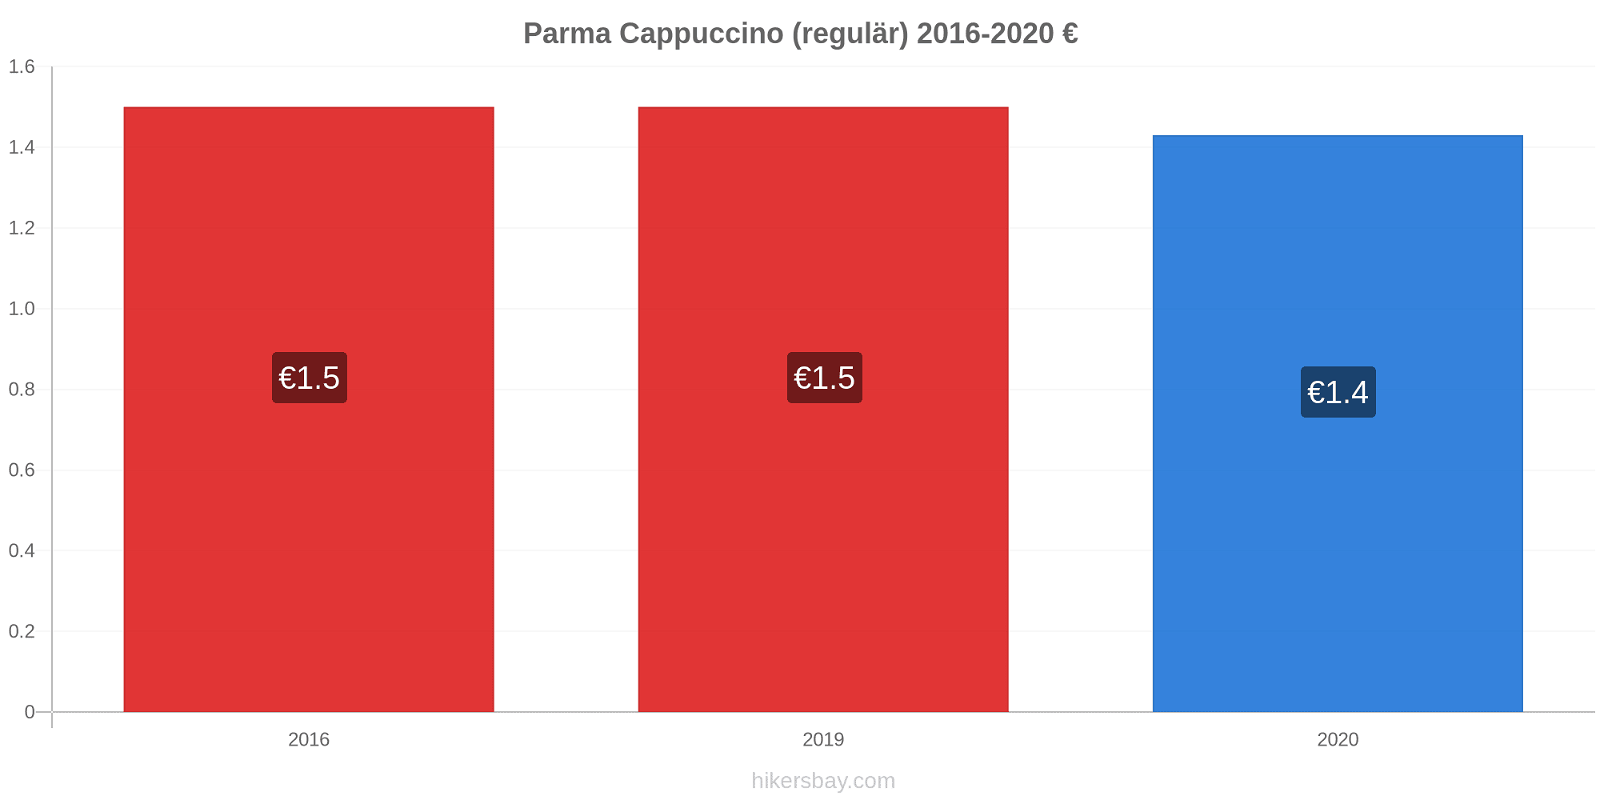 Parma Preisänderungen Cappuccino (regulär) hikersbay.com